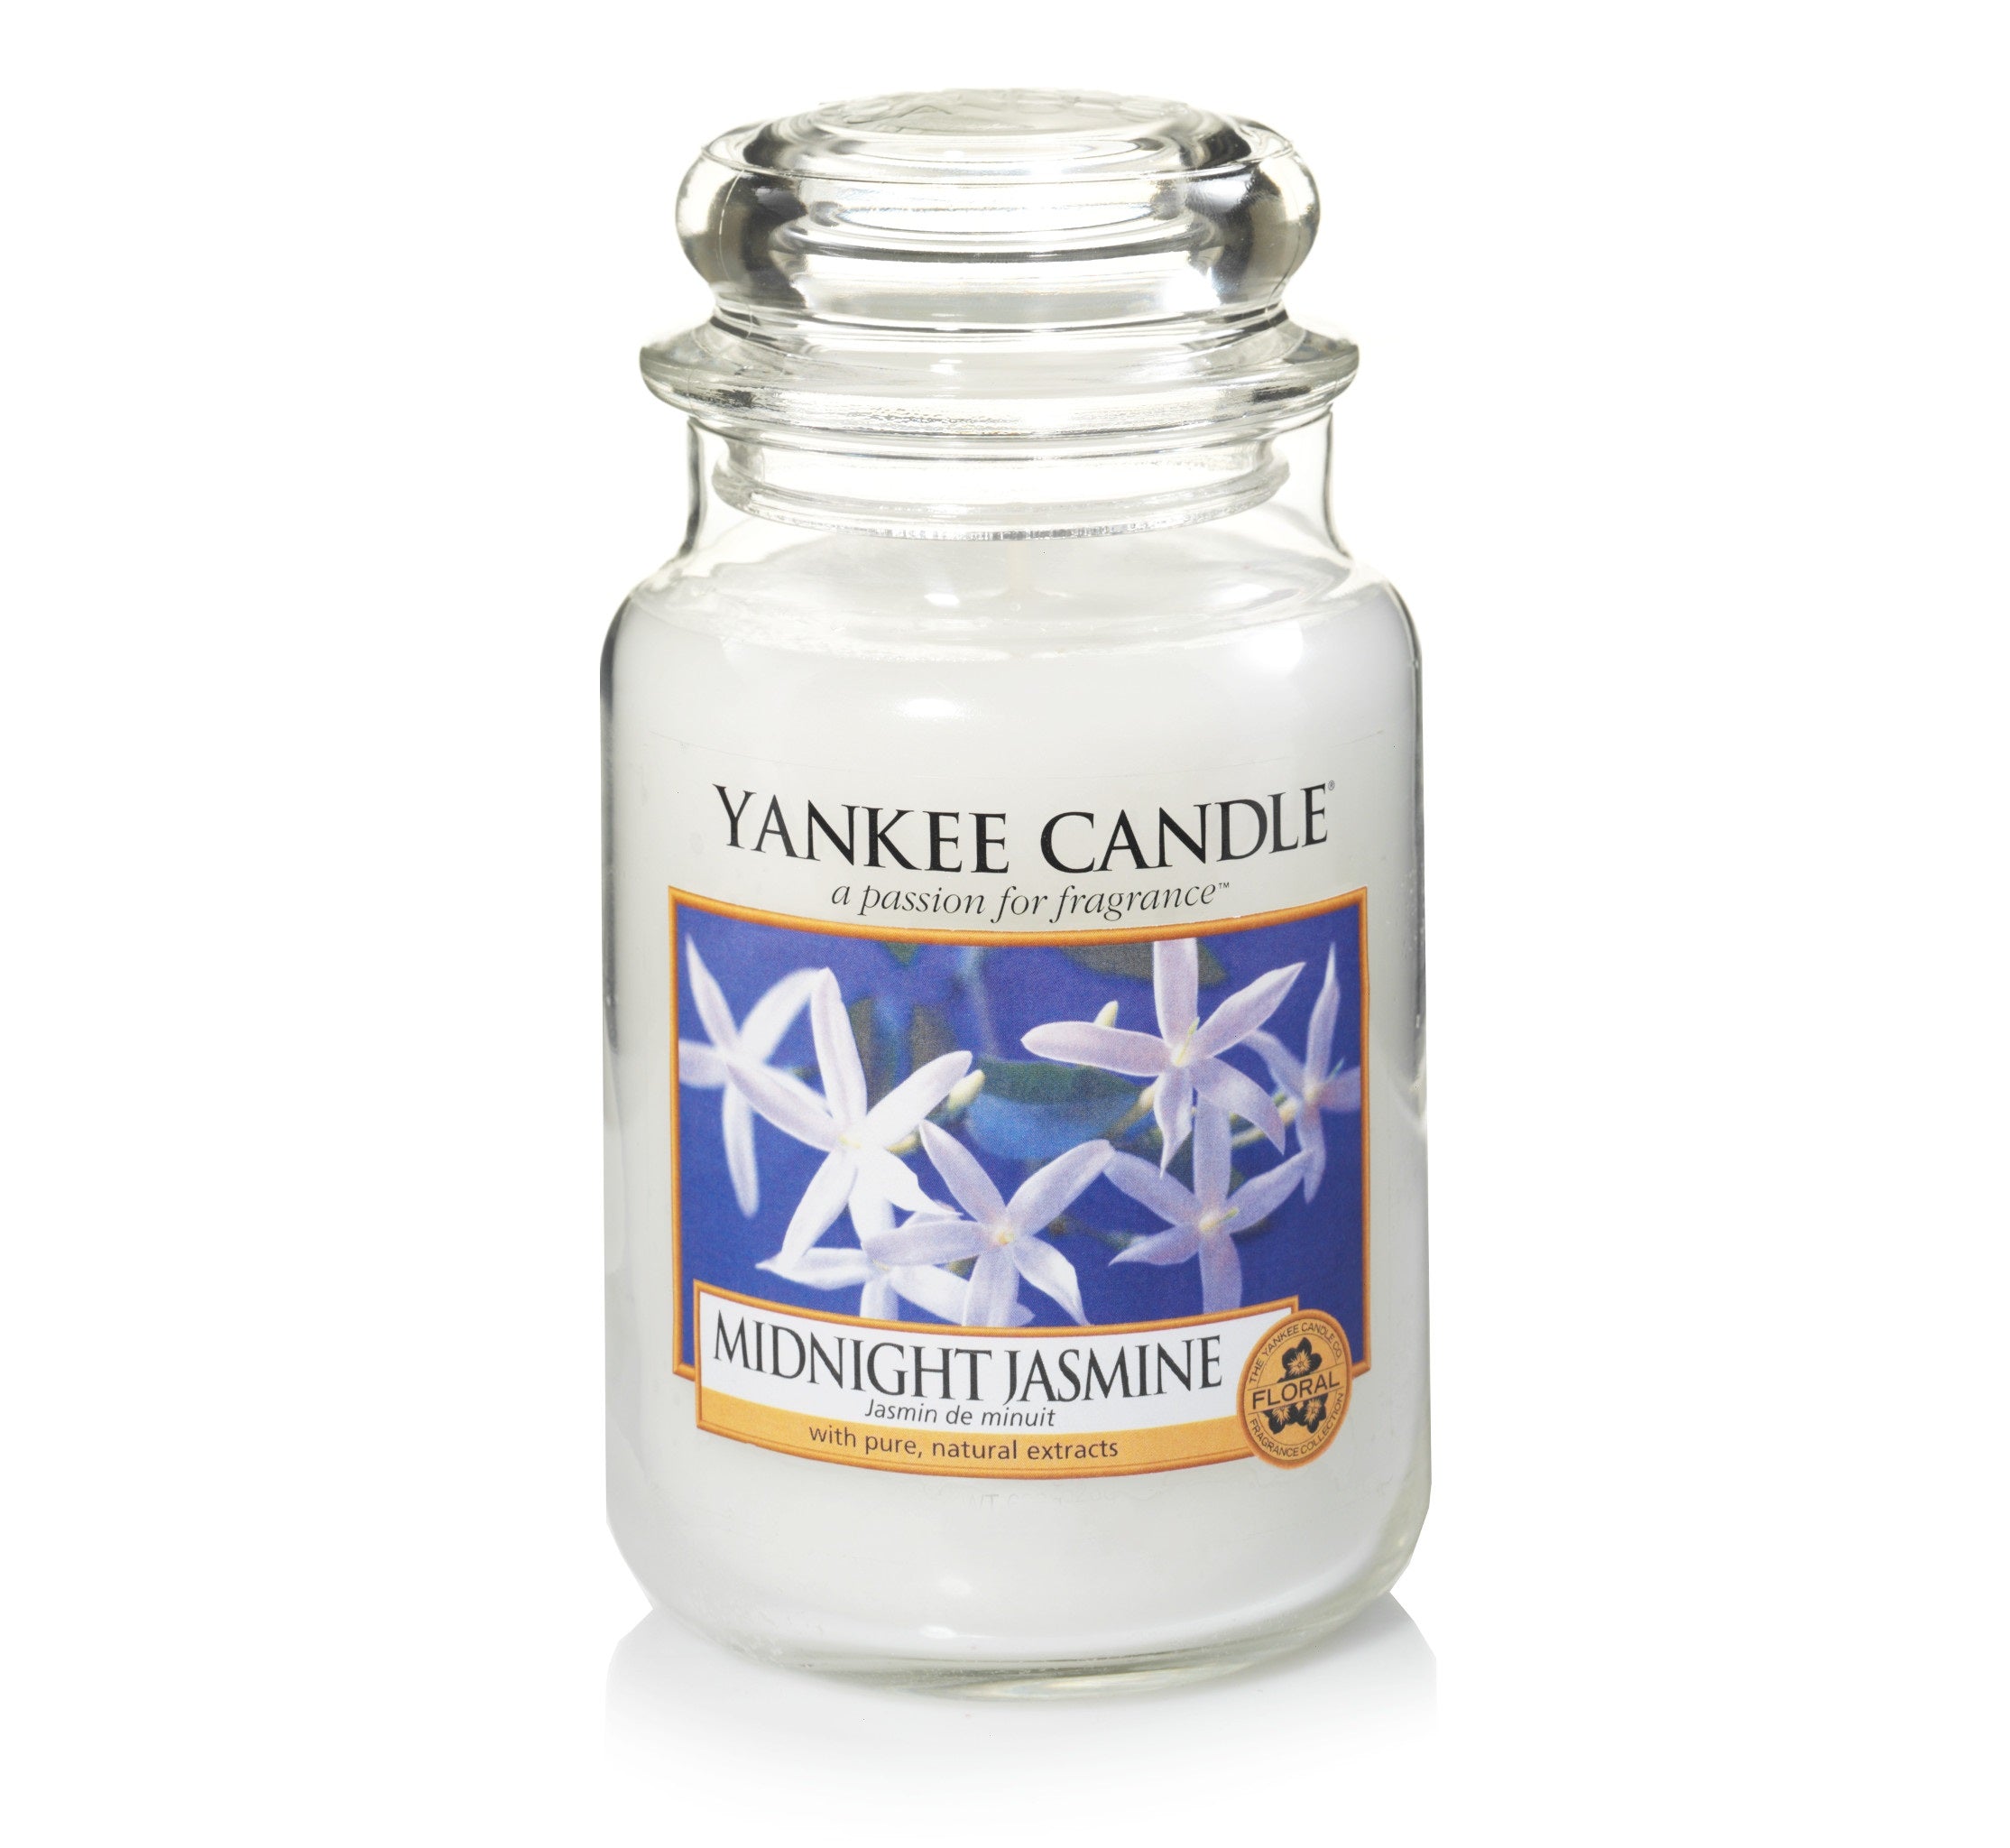 MIDNIGHT JASMINE -Yankee Candle- Giara Grande